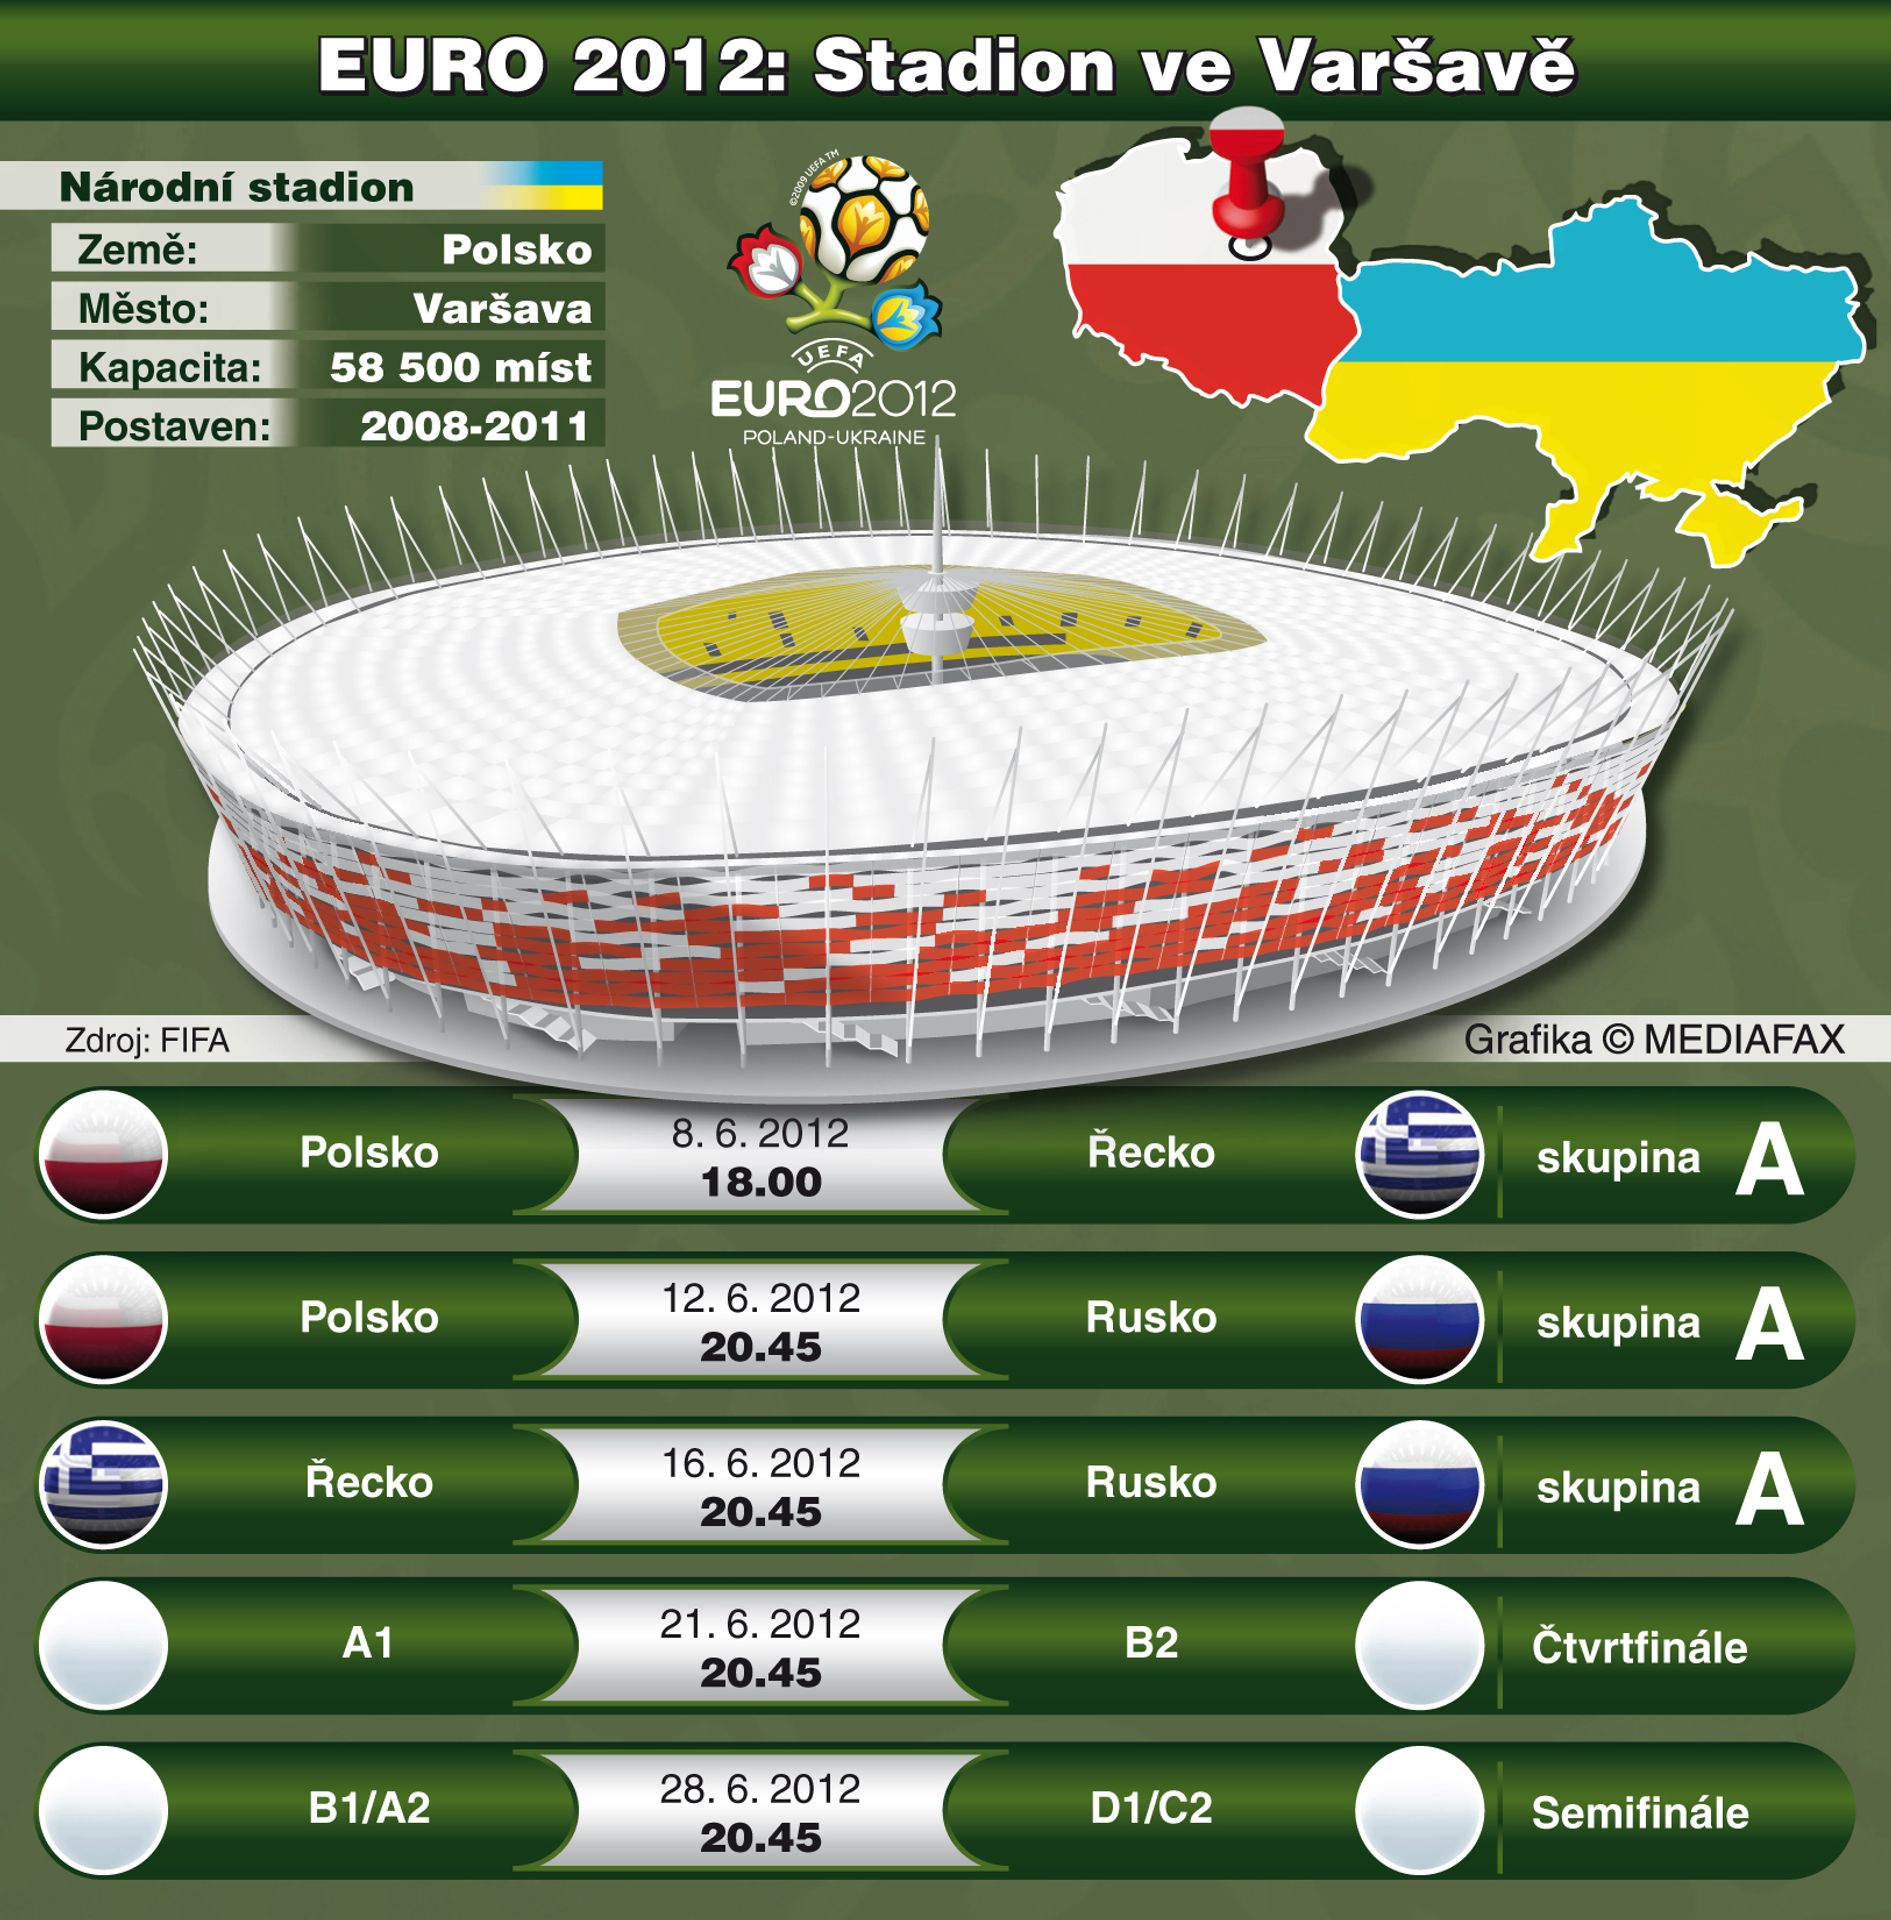 Stadiony pro EURO 2012 - 7 - GALERIE: Stadiony pro fotbalové EURO 2012 (2/8)